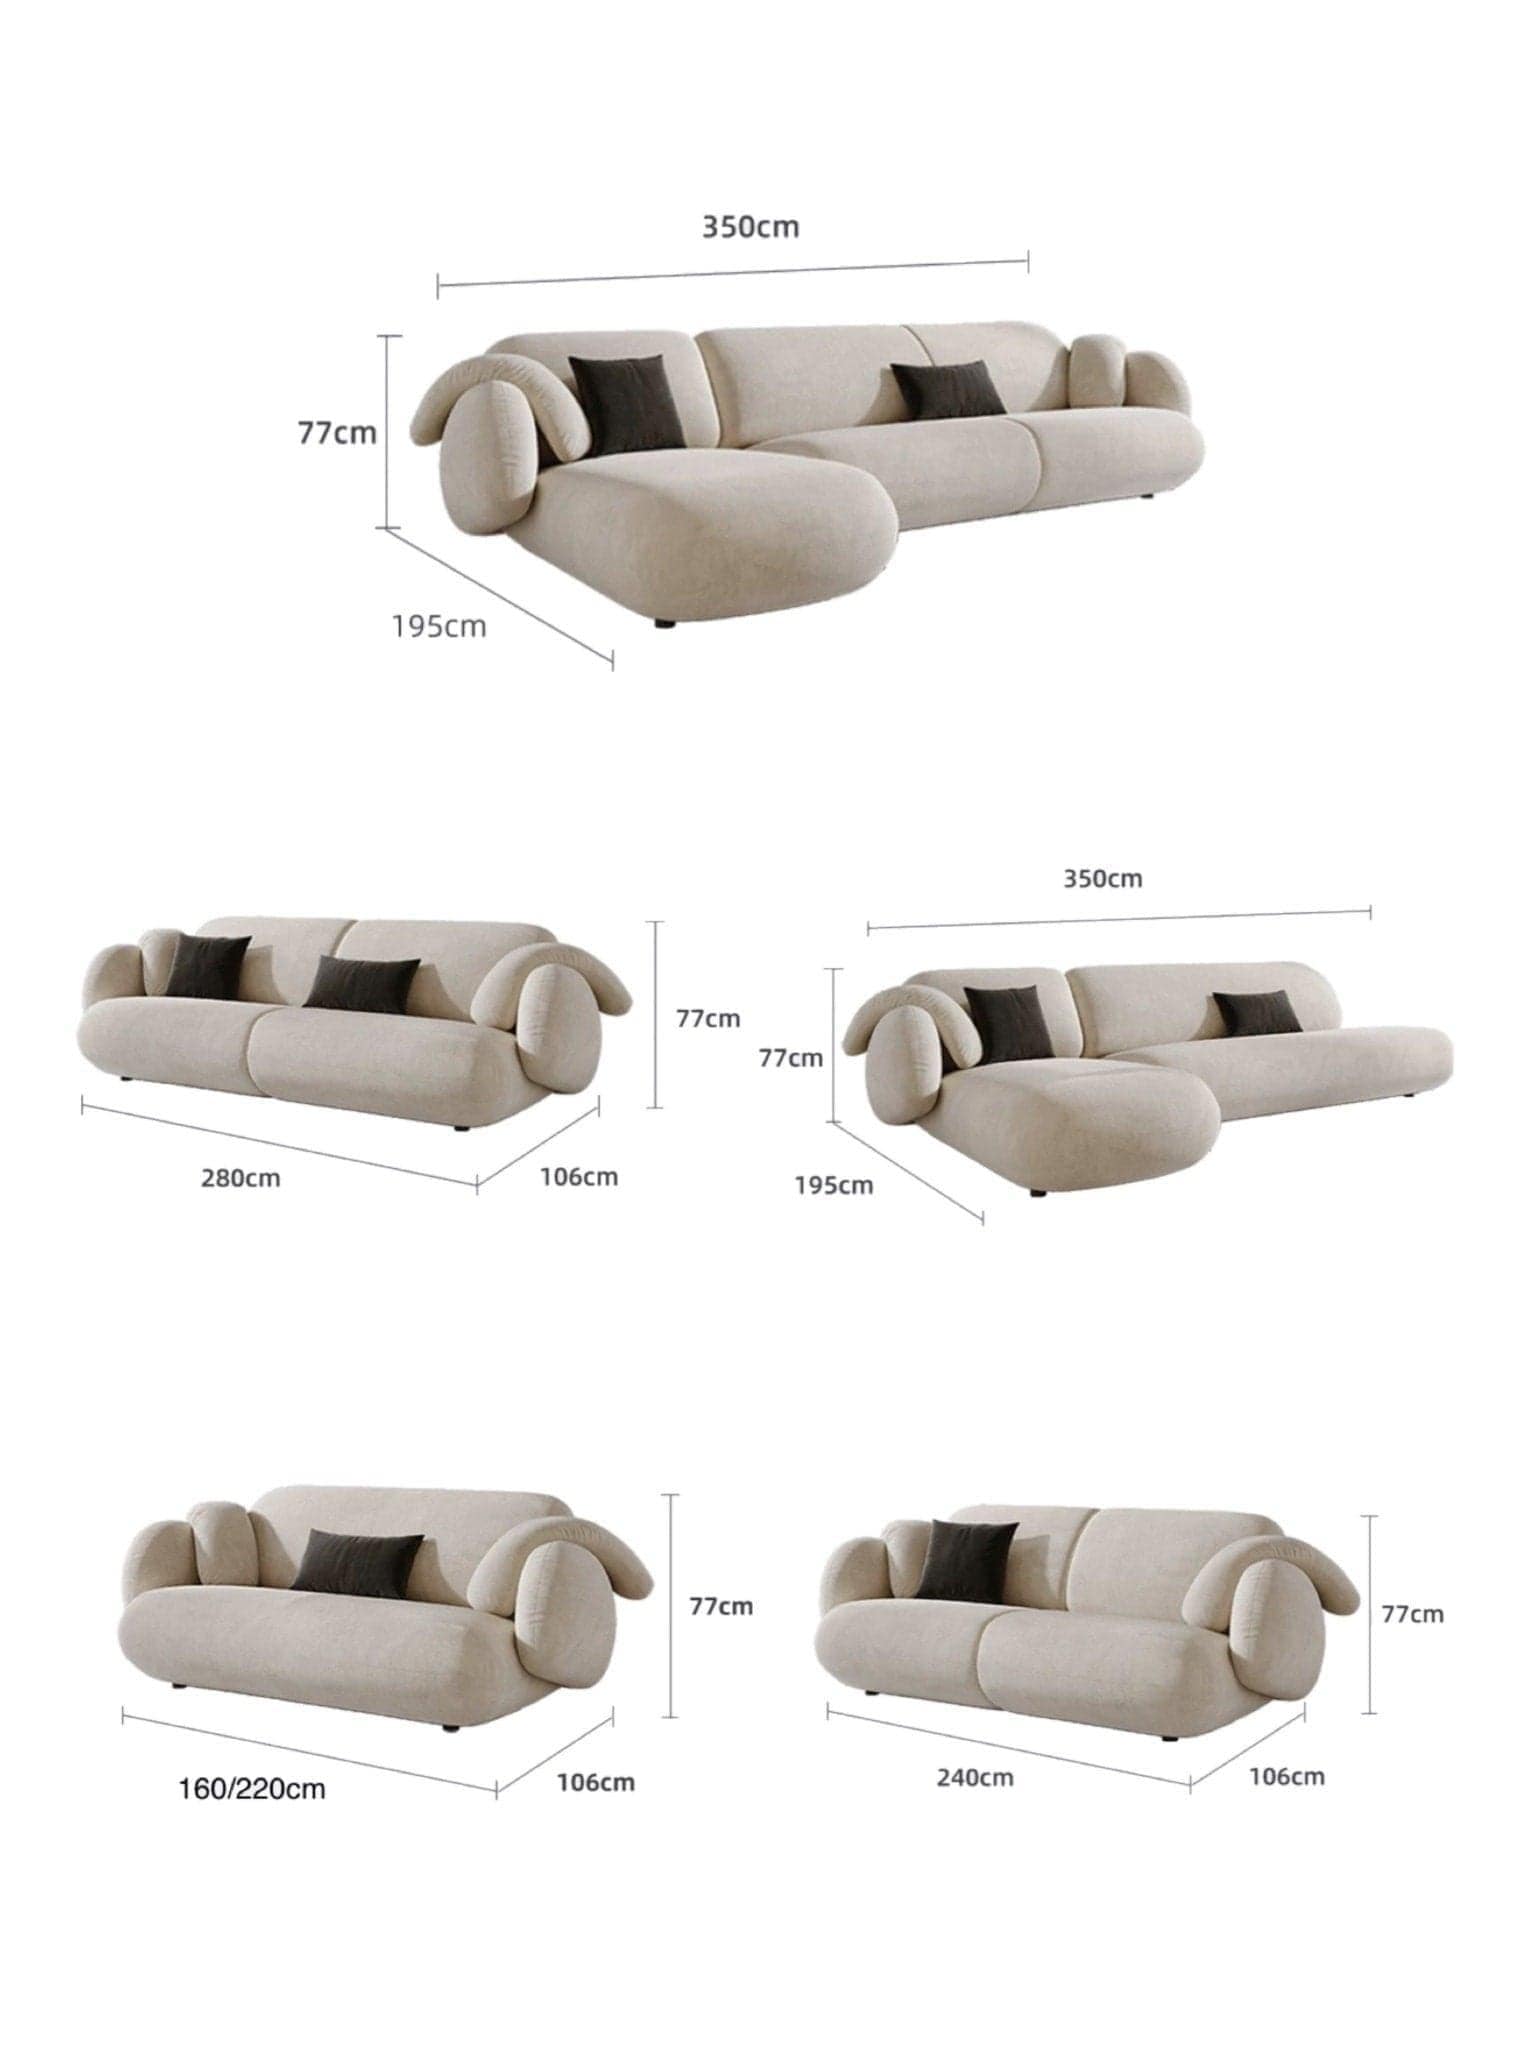 Home Atelier Scratch Resistant Suede Fabric / Length 160cm Non L-shape / Cream Andre Sectional Designer Sofa